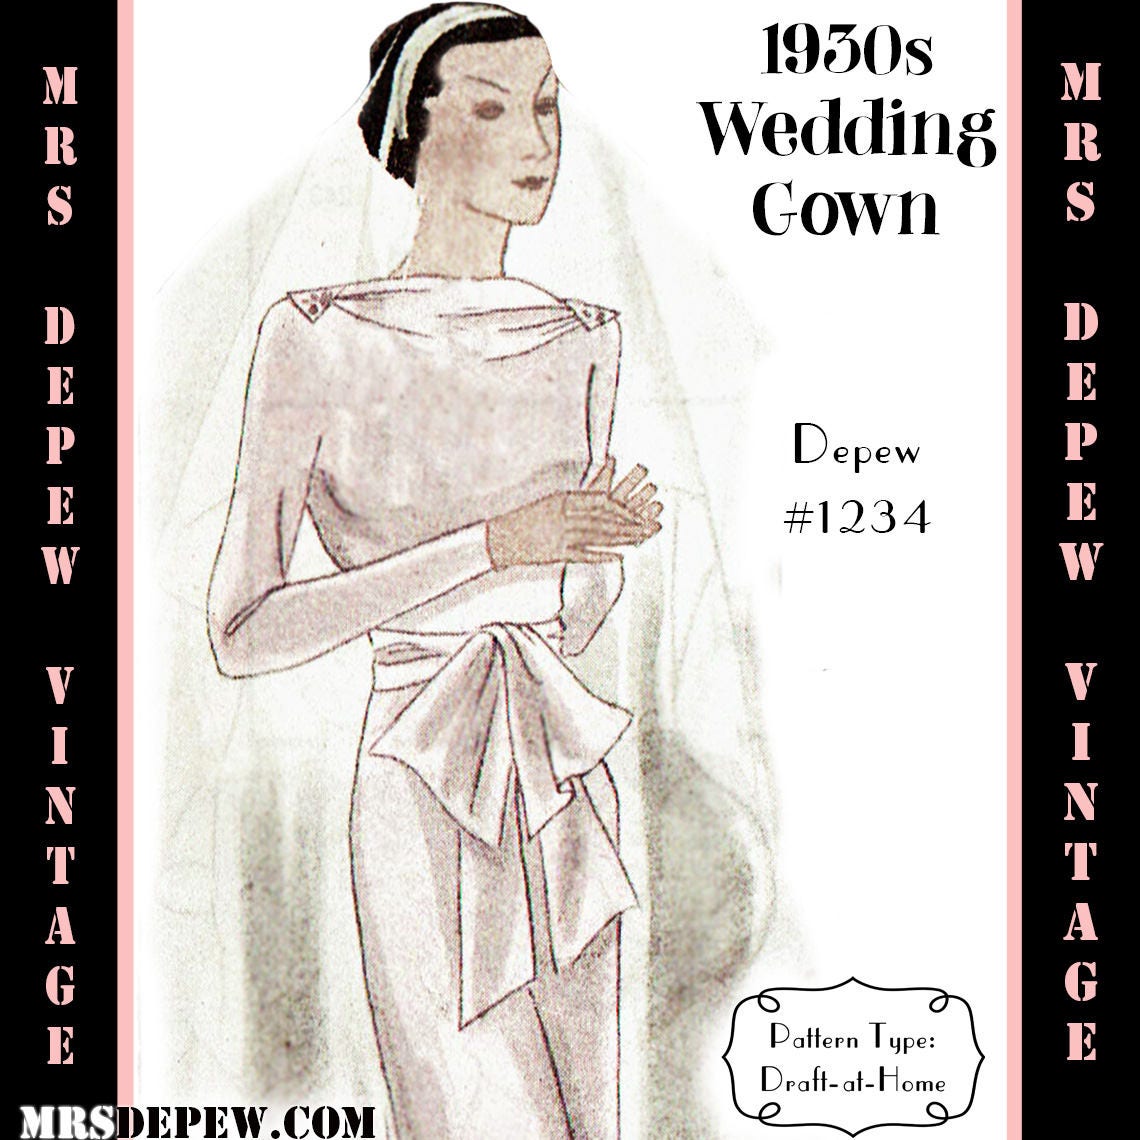 The Eternal Fashion Of The Wedding Dress - Tiffany Rose Maternity Blog HK